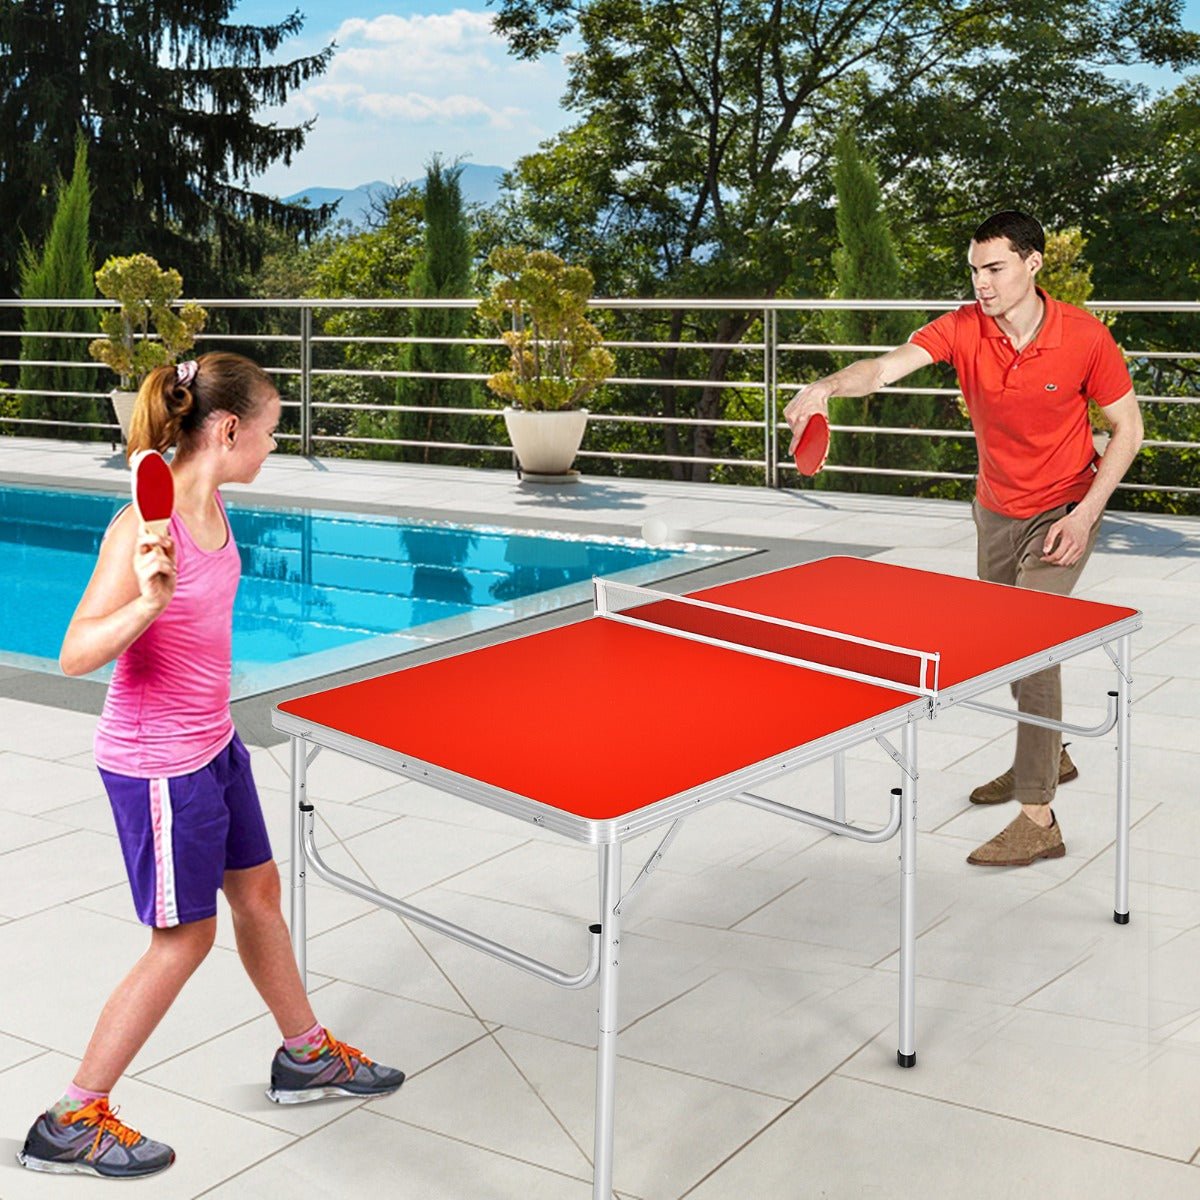 Portable Folding Table Tennis Set: Fun On-The-Go